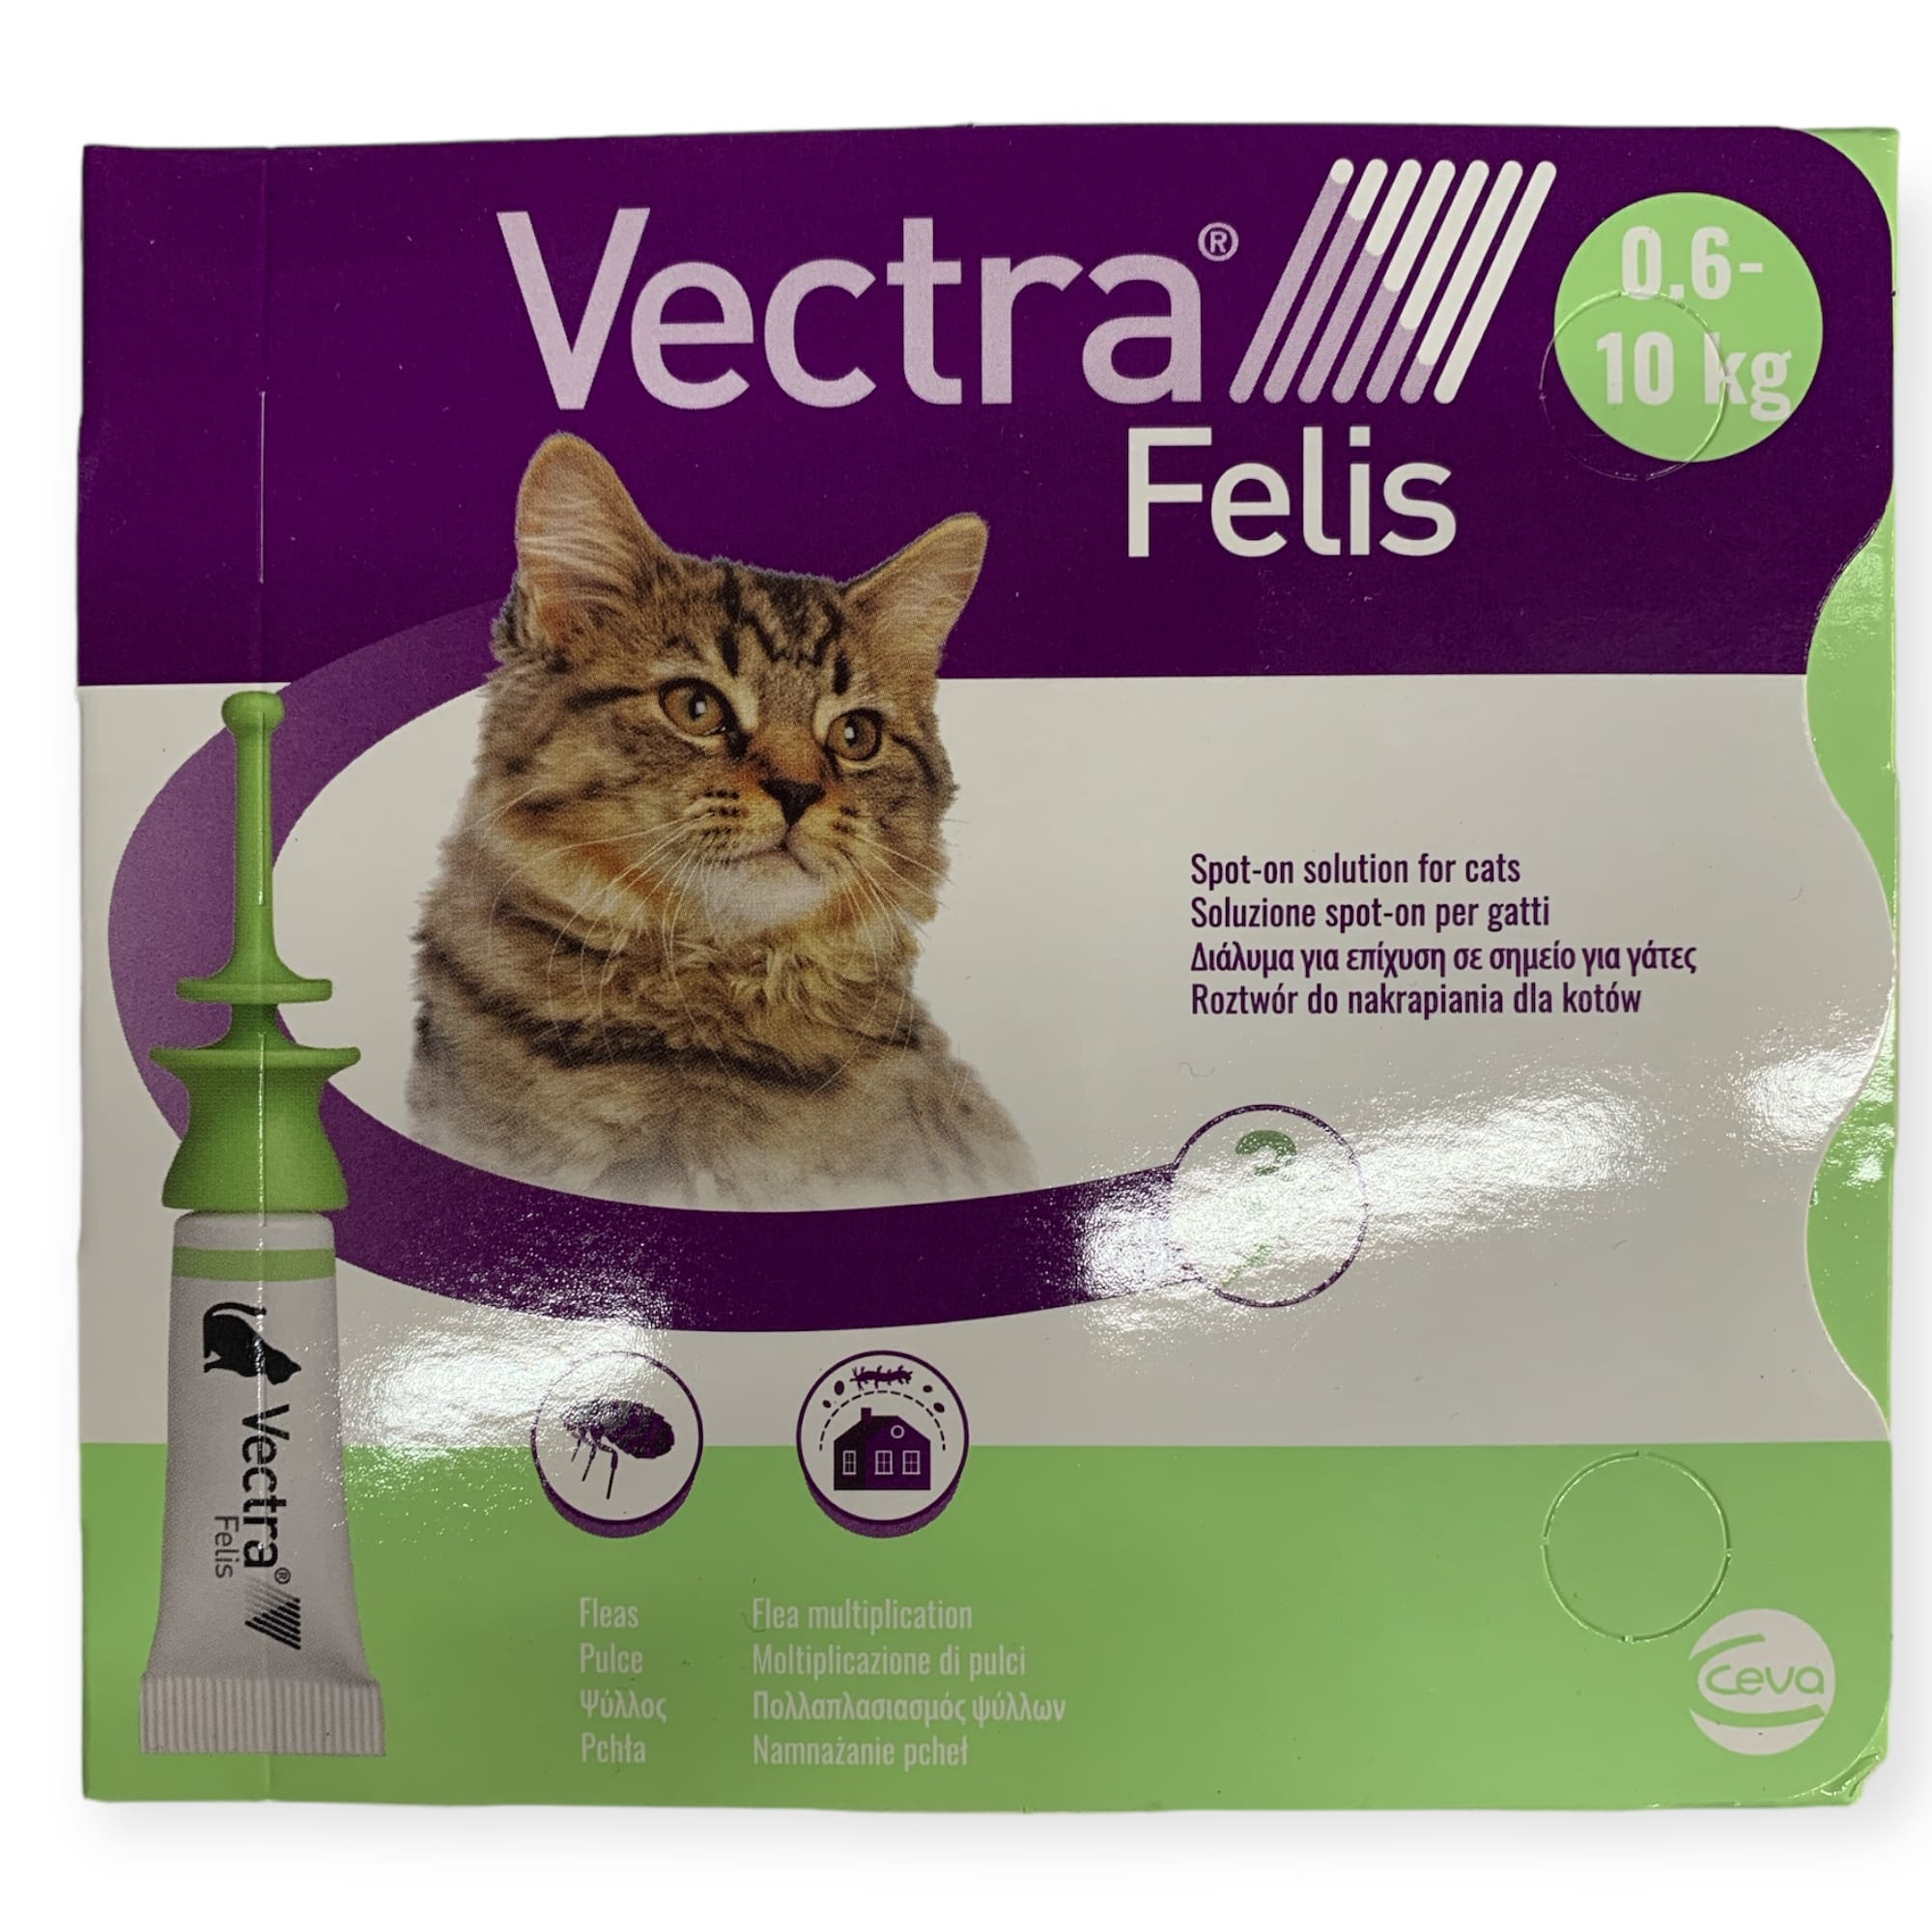 Vectra Felis – מניעת פרעושים לחתולים באמפולות